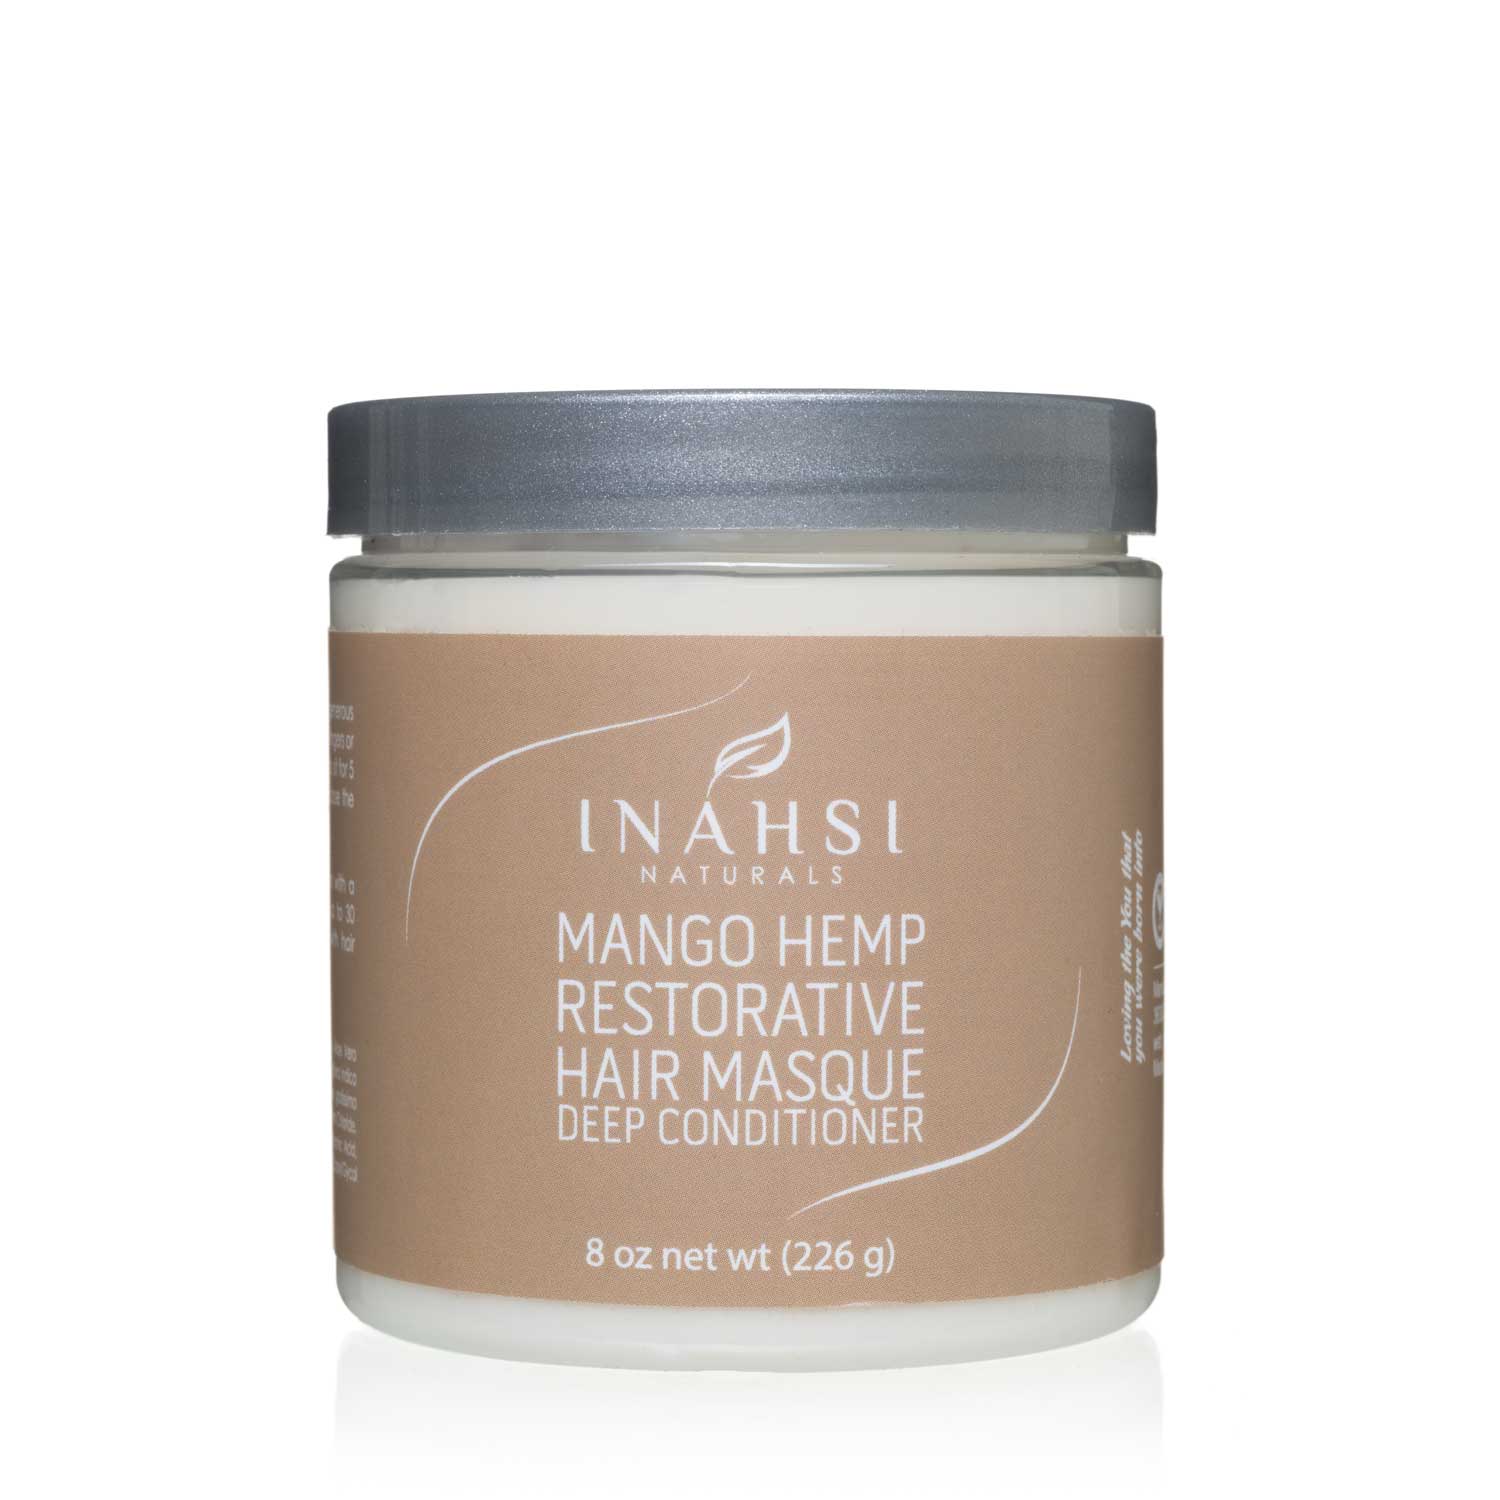 Inahsi Naturals Mango Hemp Restorative Hair Masque and Deep Conditioner